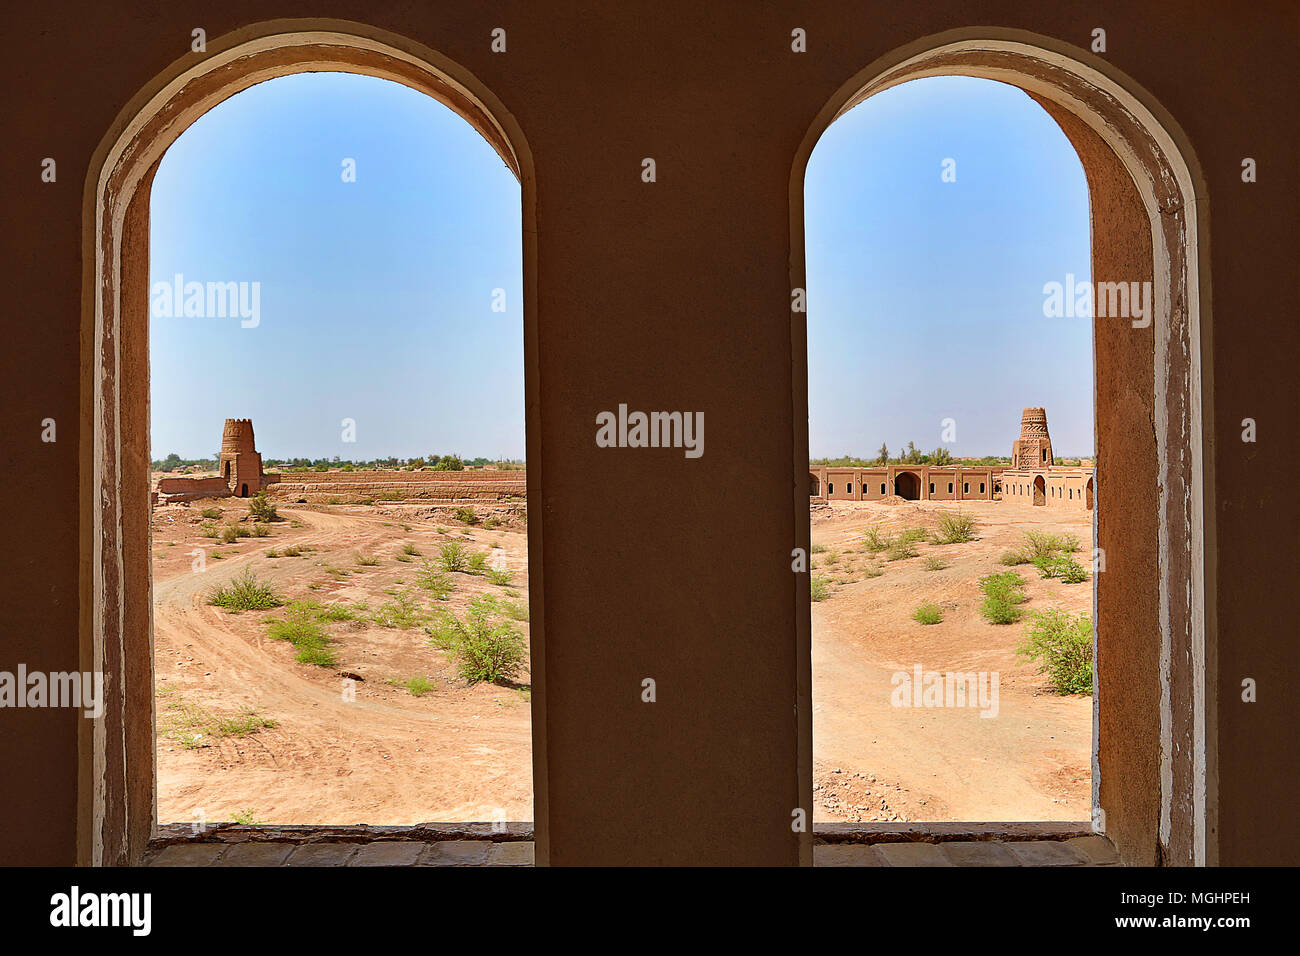 Ruins of the medieval caravanserai in Shafiabad, Iran Stock Photo